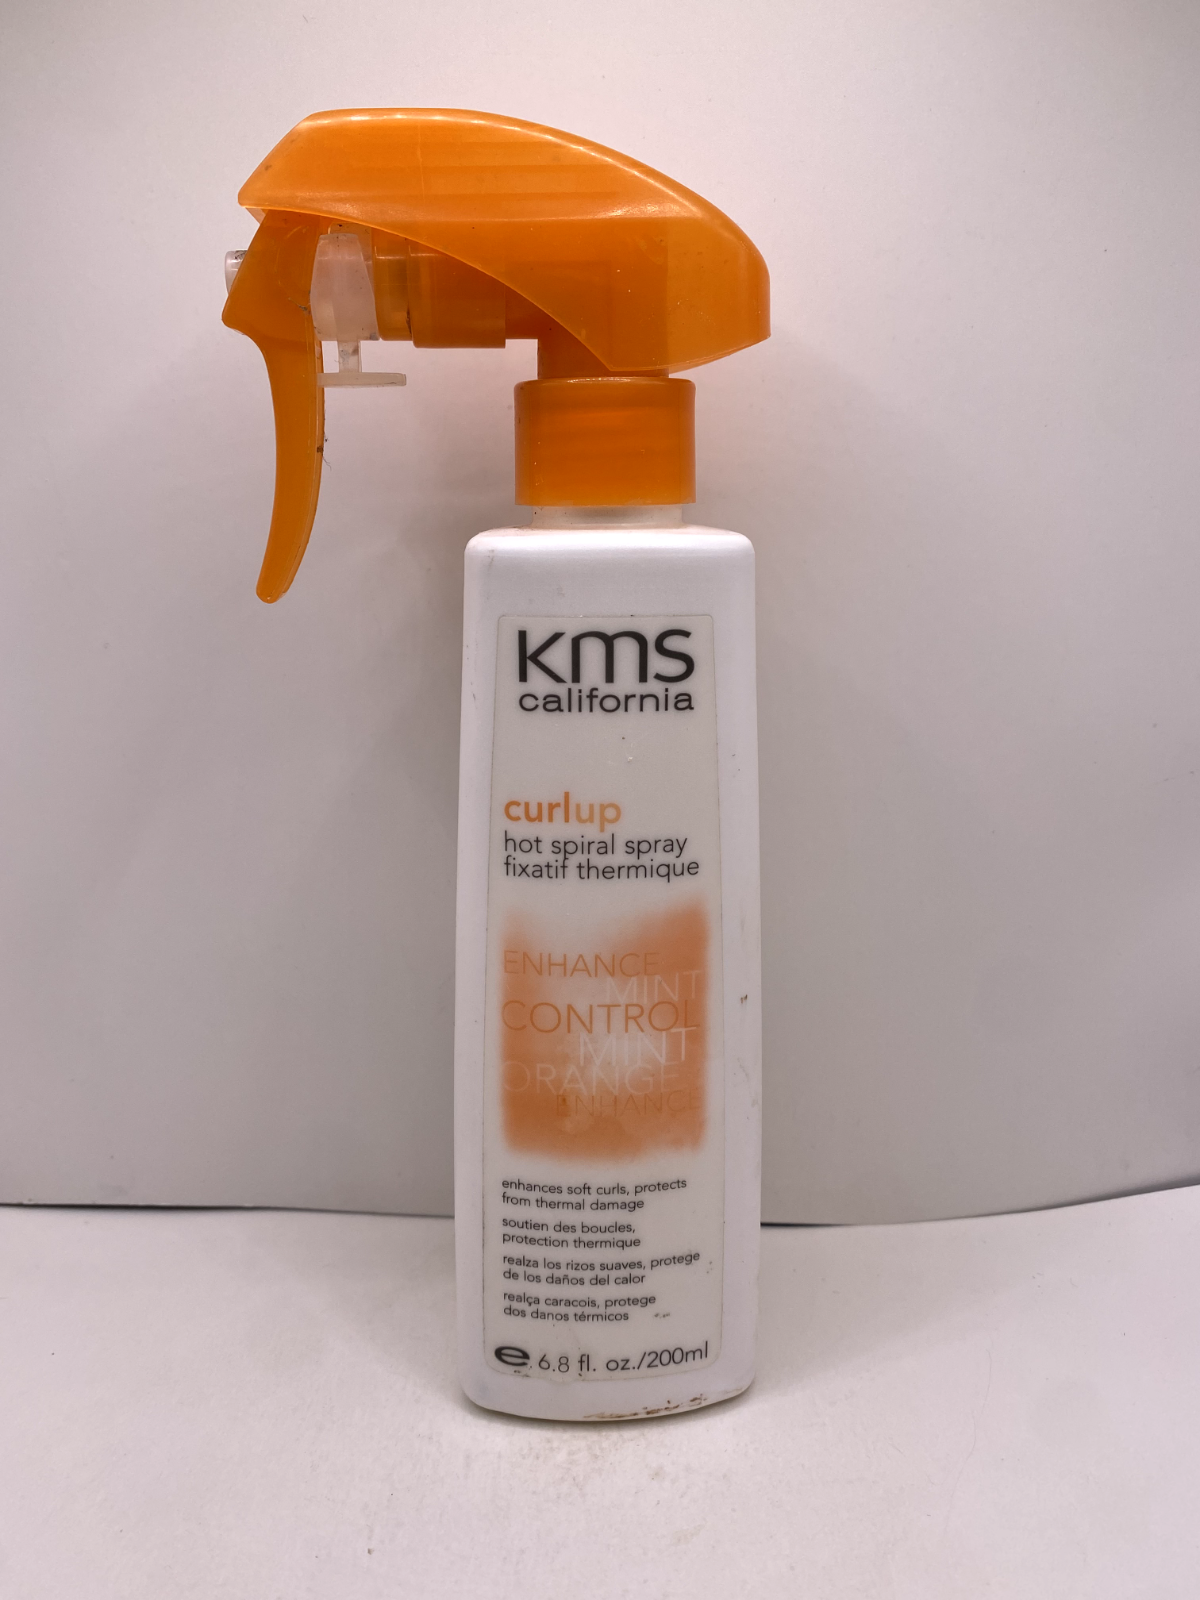 KMS Curl Up Hot Spiral Spray - 6.8 oz RARE - $39.99